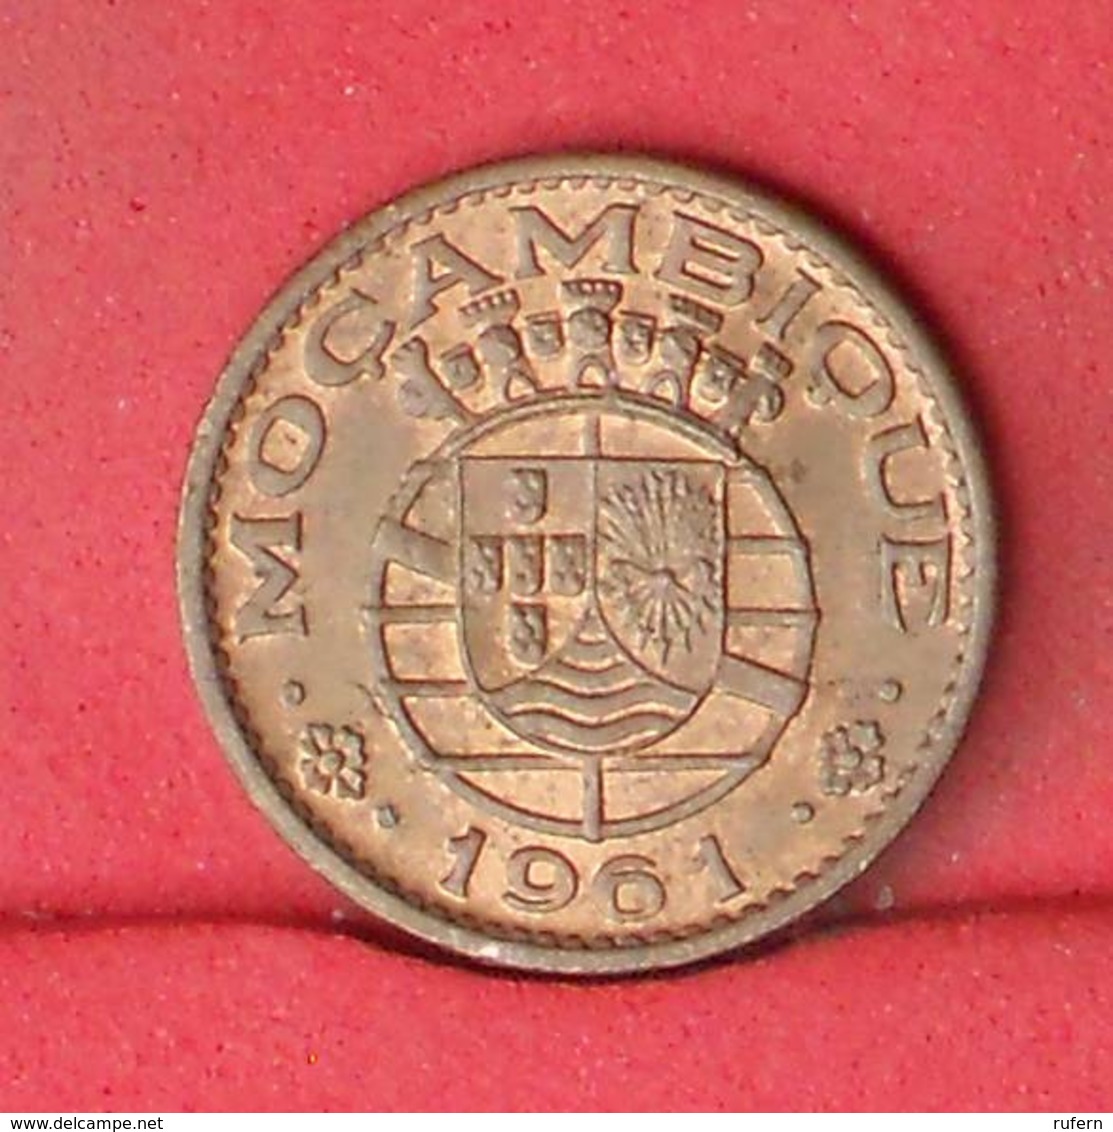 MOZAMBIQUE 20 CENTAVOS 1961 -    KM# 85 - (Nº32250) - Mozambico